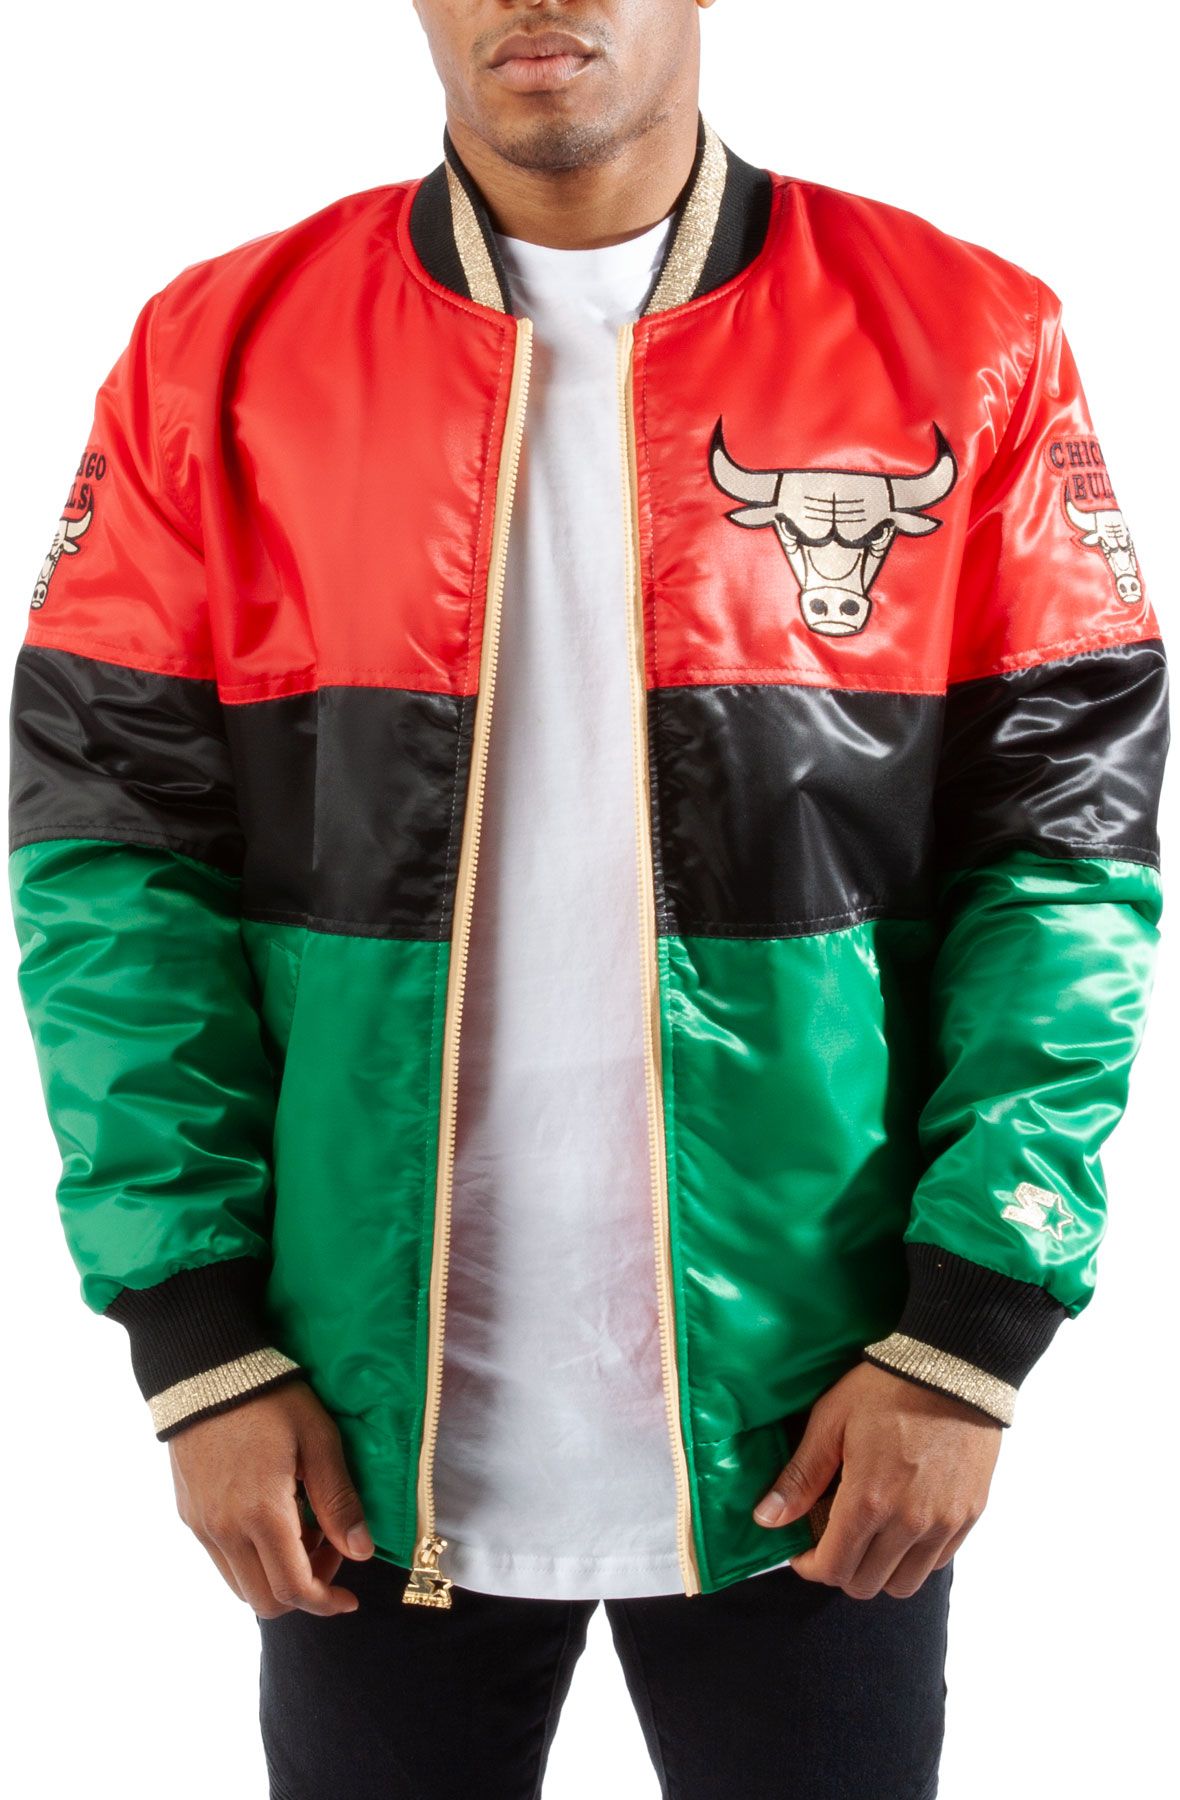 mens chicago bulls jacket